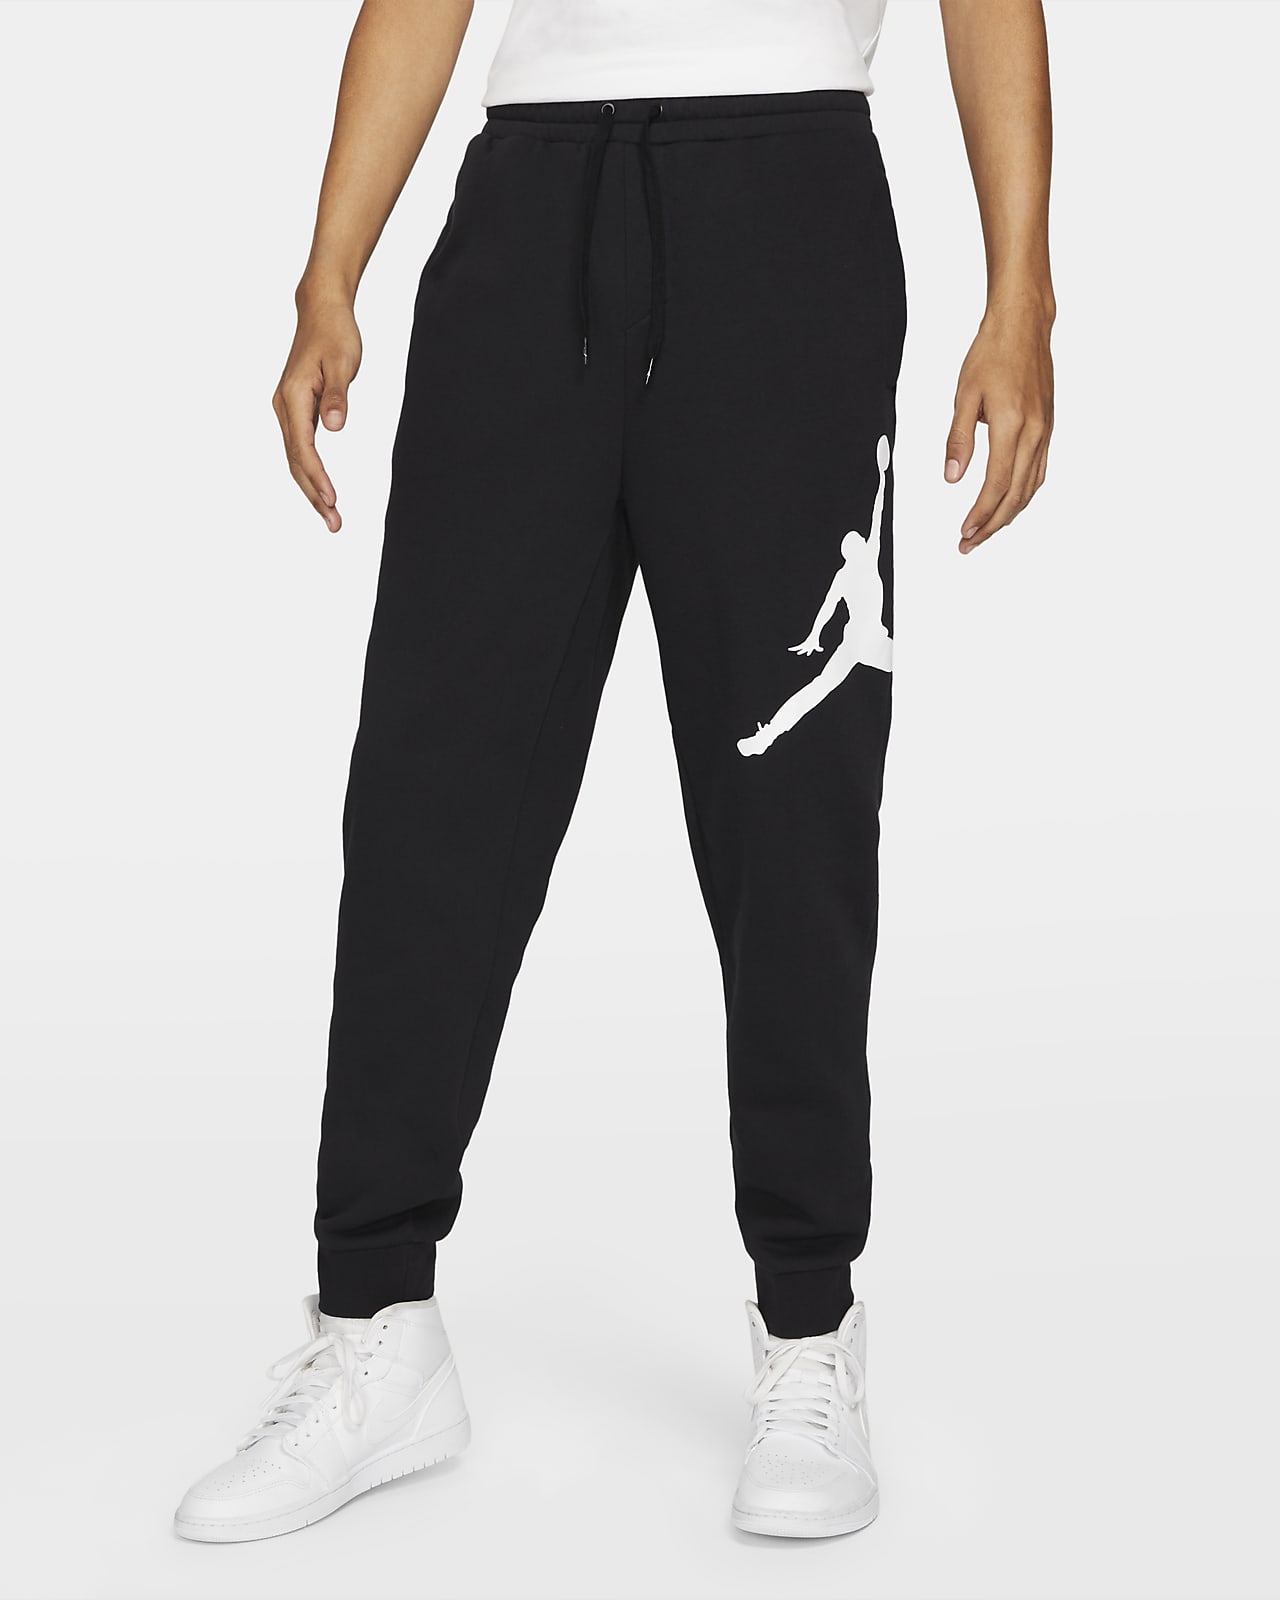 mañana Especializarse Pickering Pantalones de tejido Fleece para hombre Jordan Jumpman Logo. Nike.com